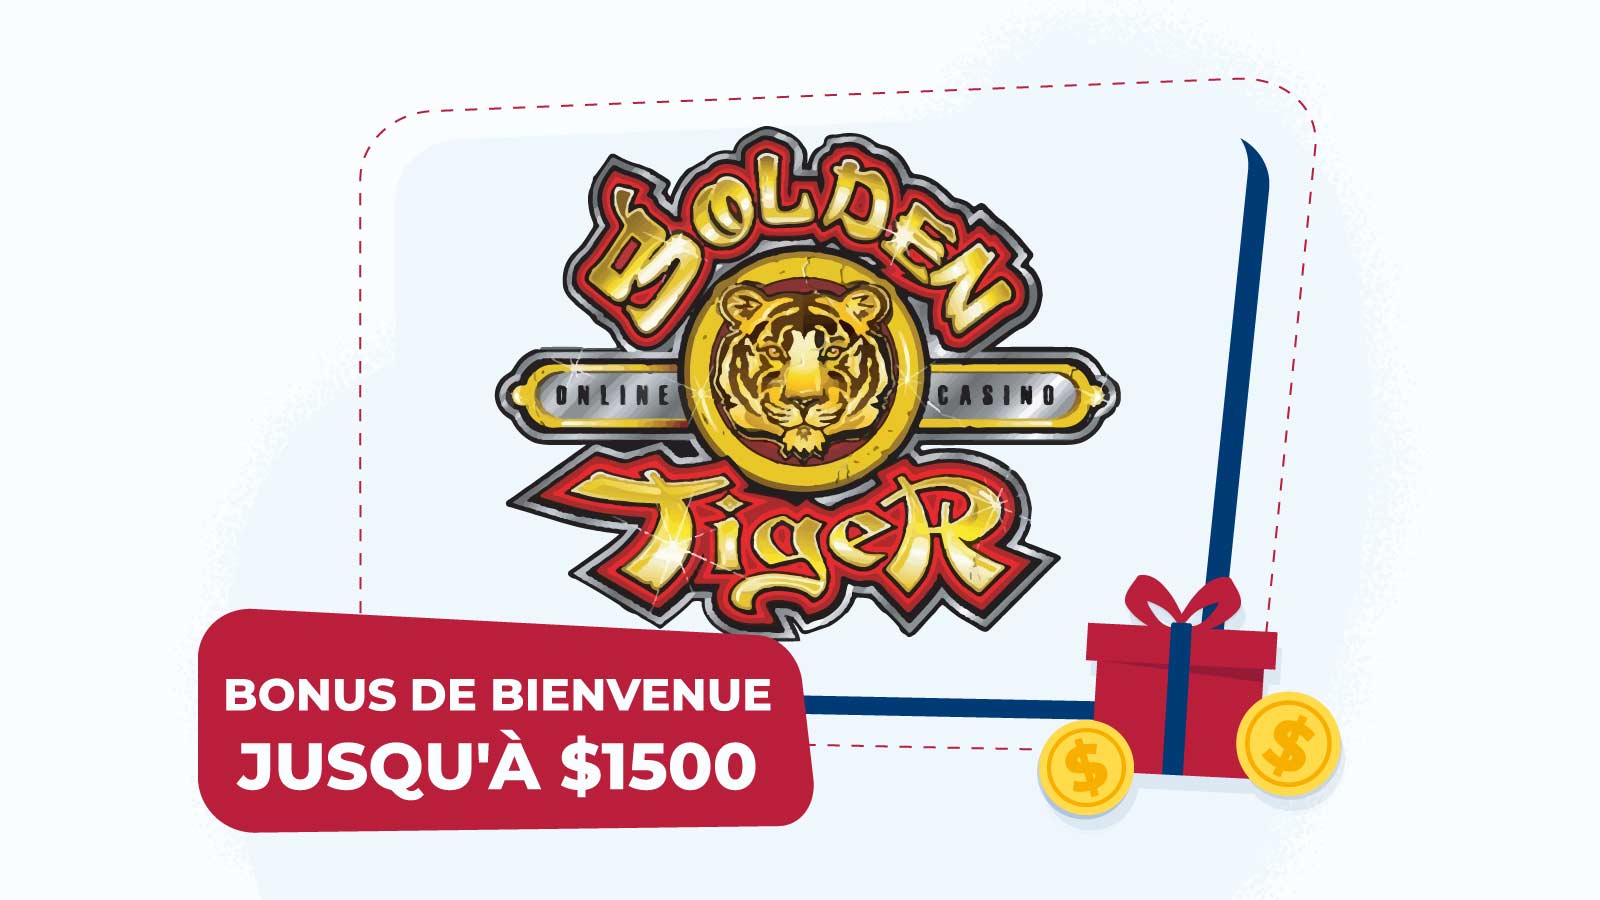 Bonus de bienvenue - jusqu'à $1500 sur Golden Tiger Casino